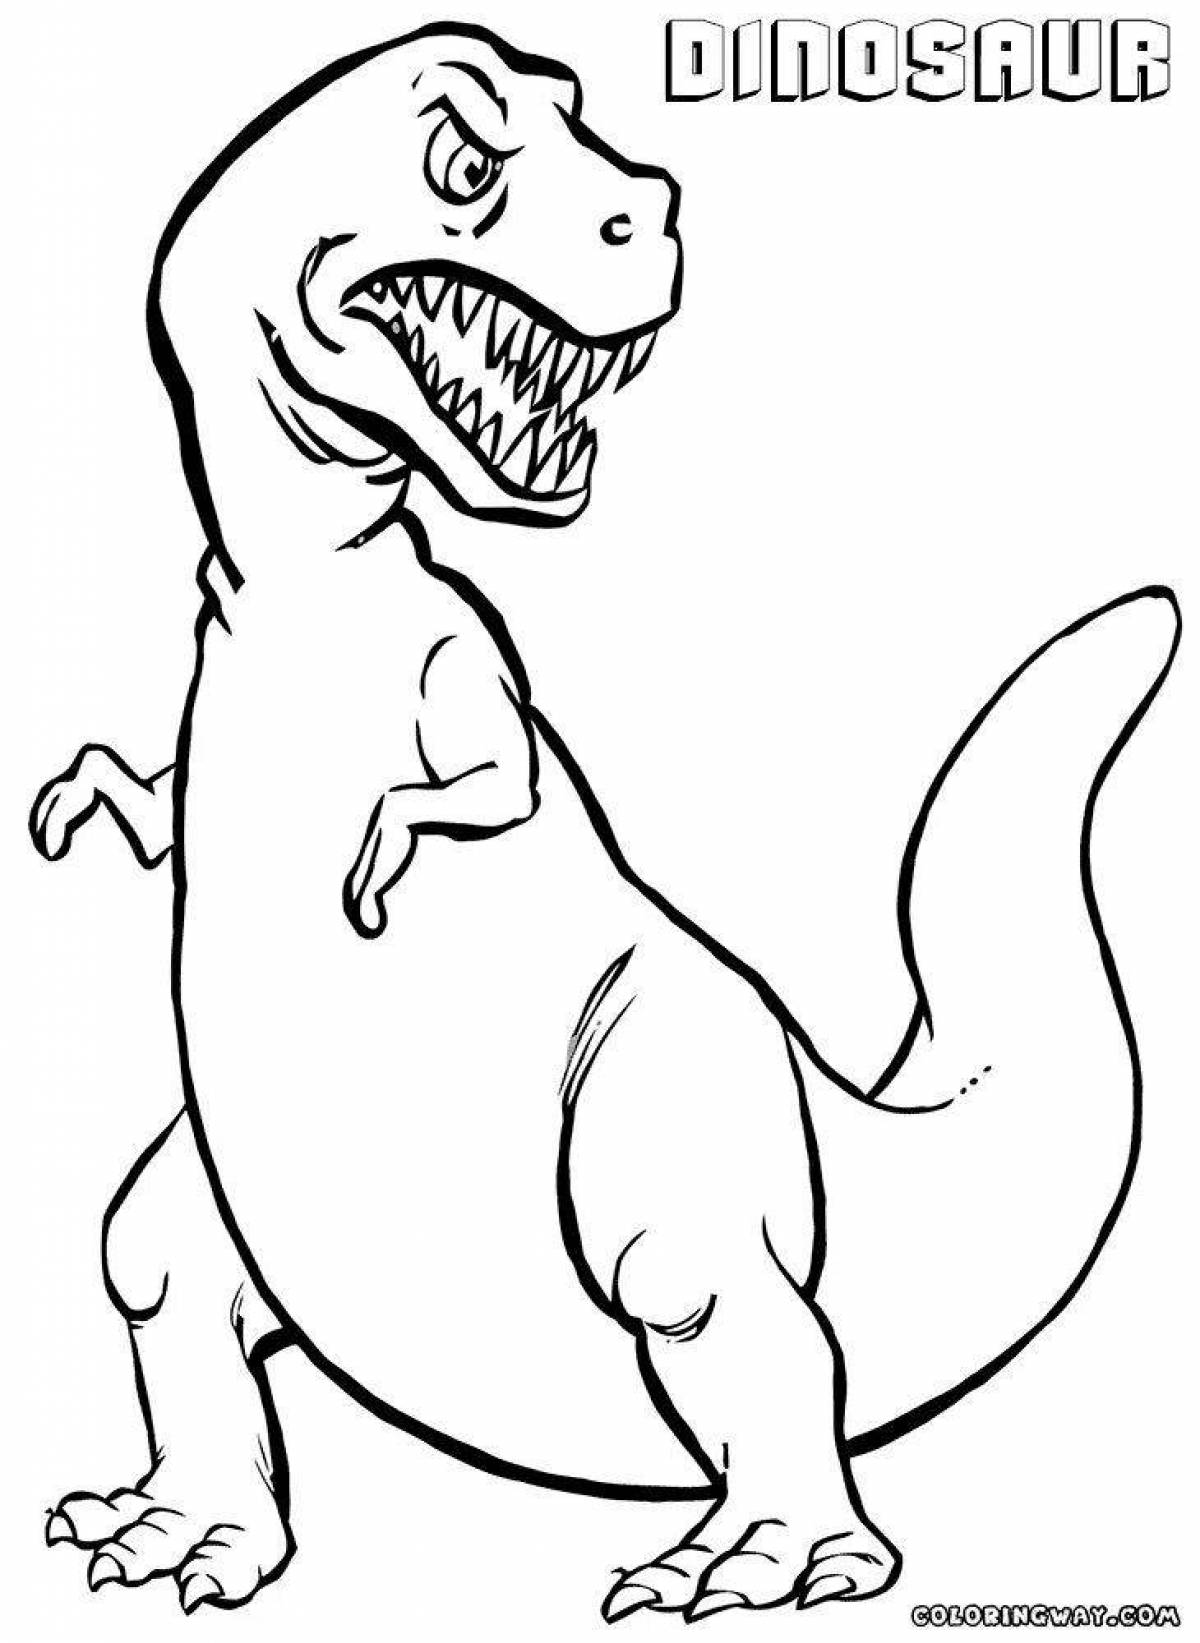 Tarbosaurus fun cartoon coloring book